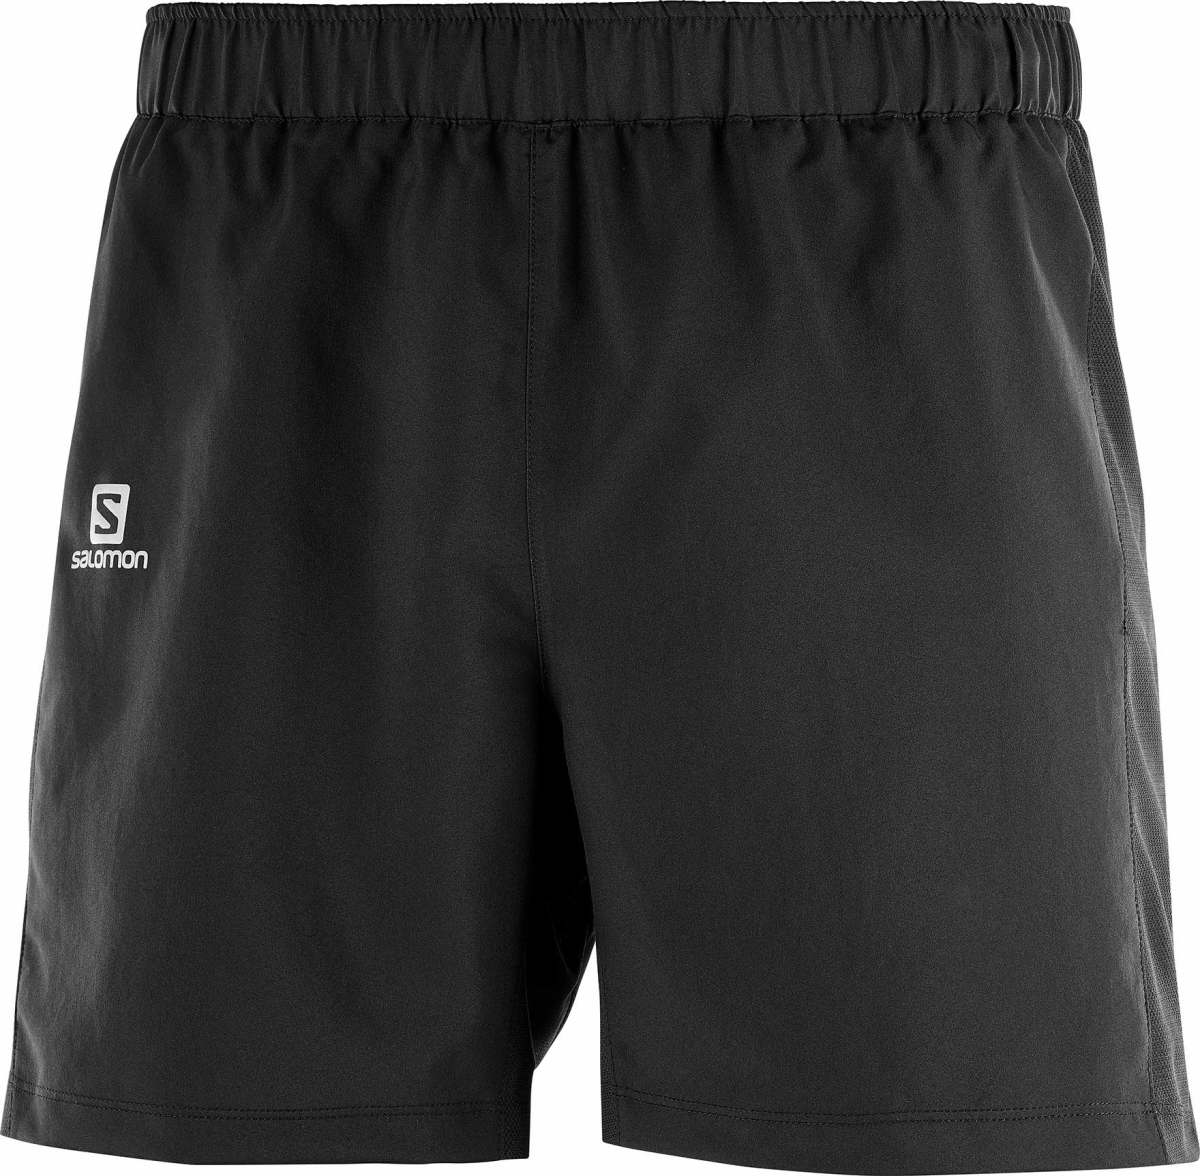 Salomon shorts